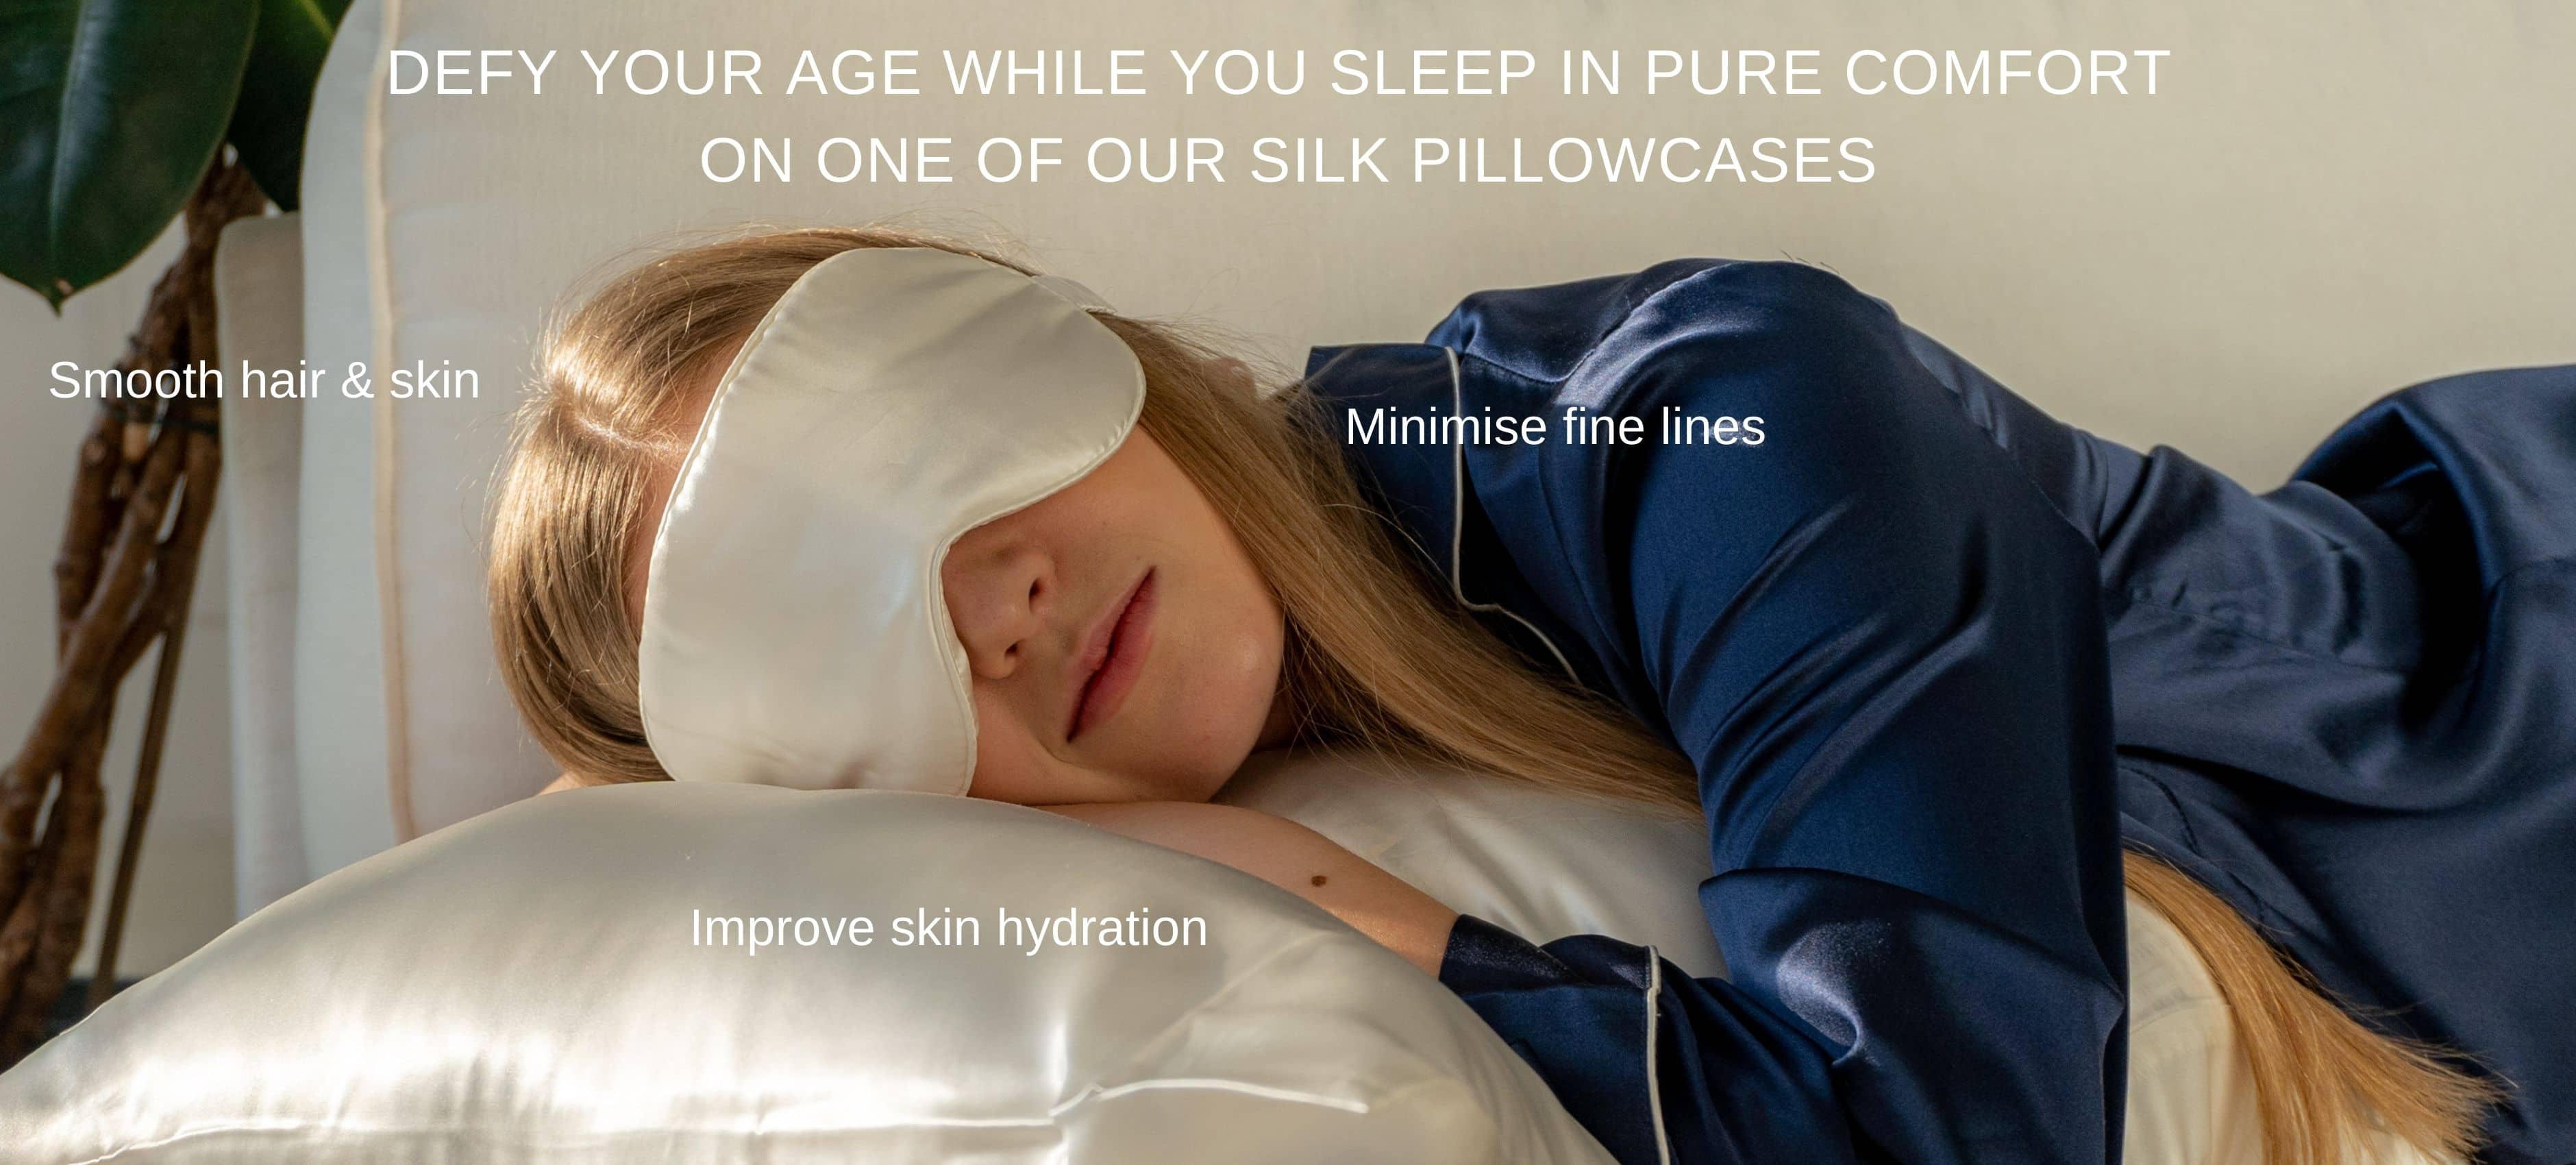 Woman sleeping on a silk pillowcase by Silk Closet wearing an eye mask and silk pajamas